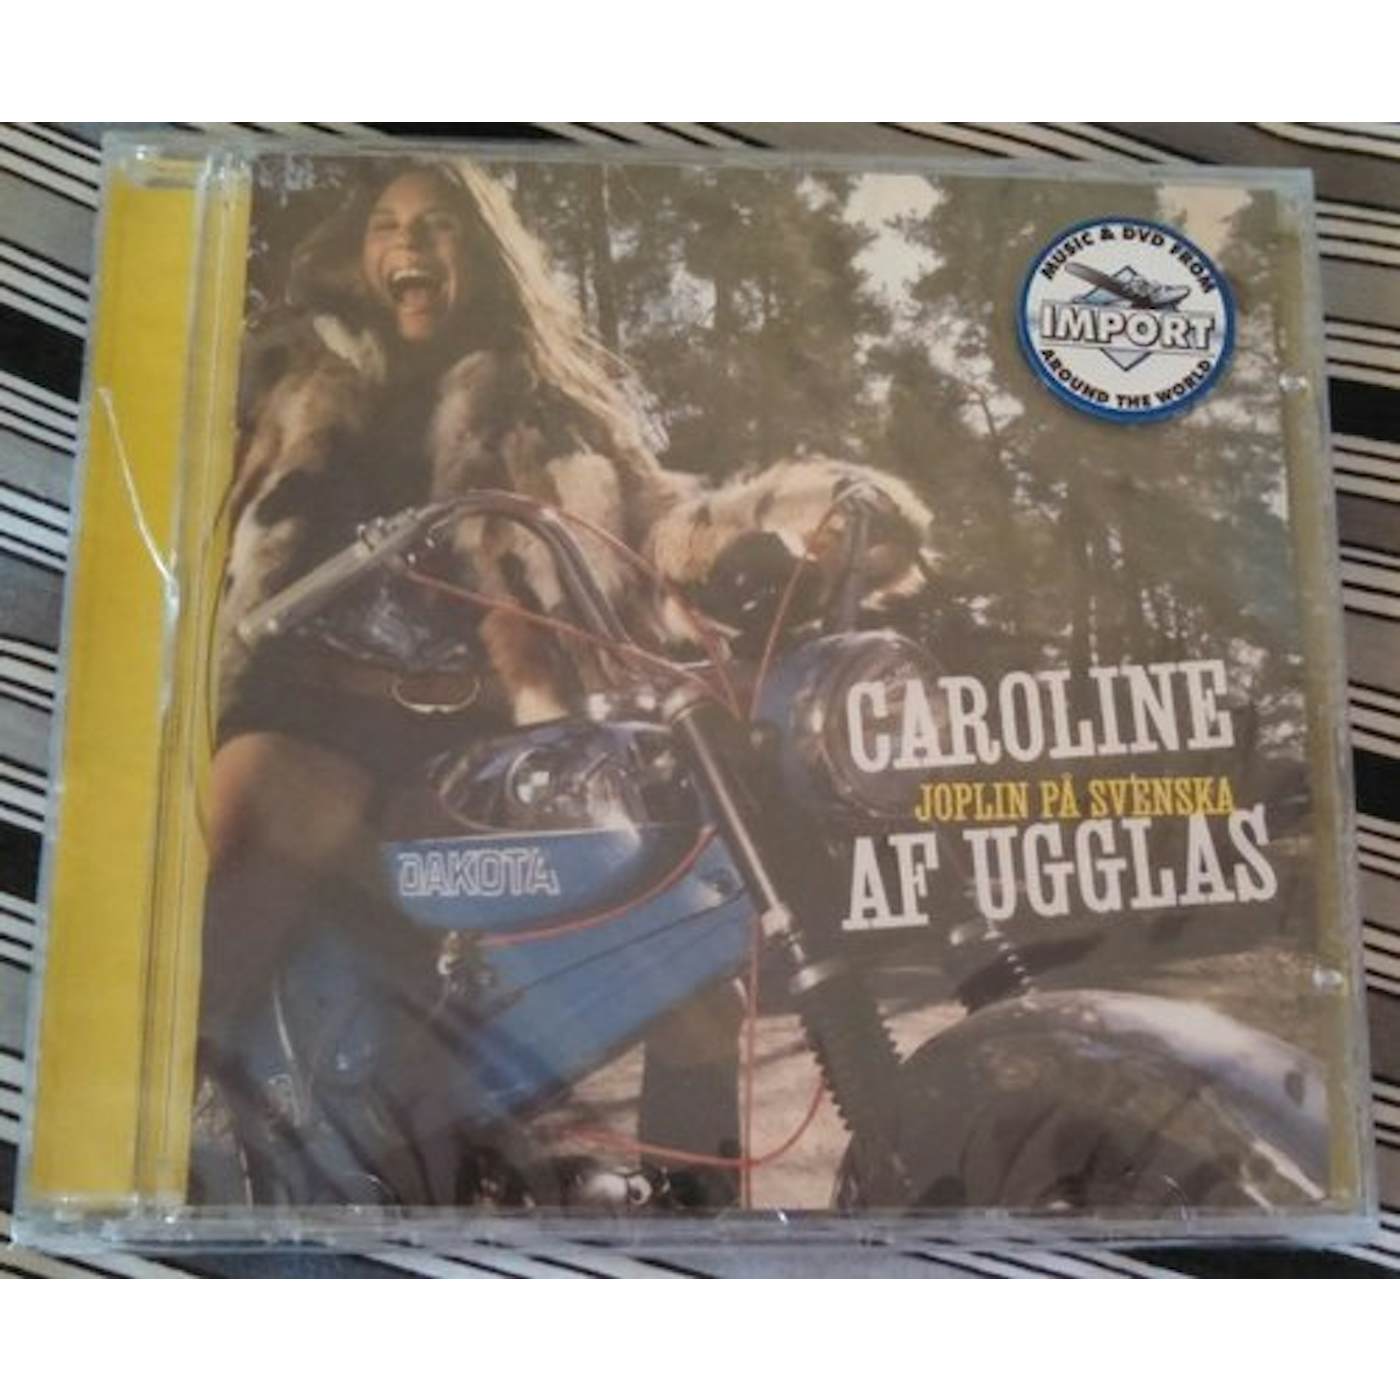 Caroline af Ugglas JOPLIN PA SVENSKA CD